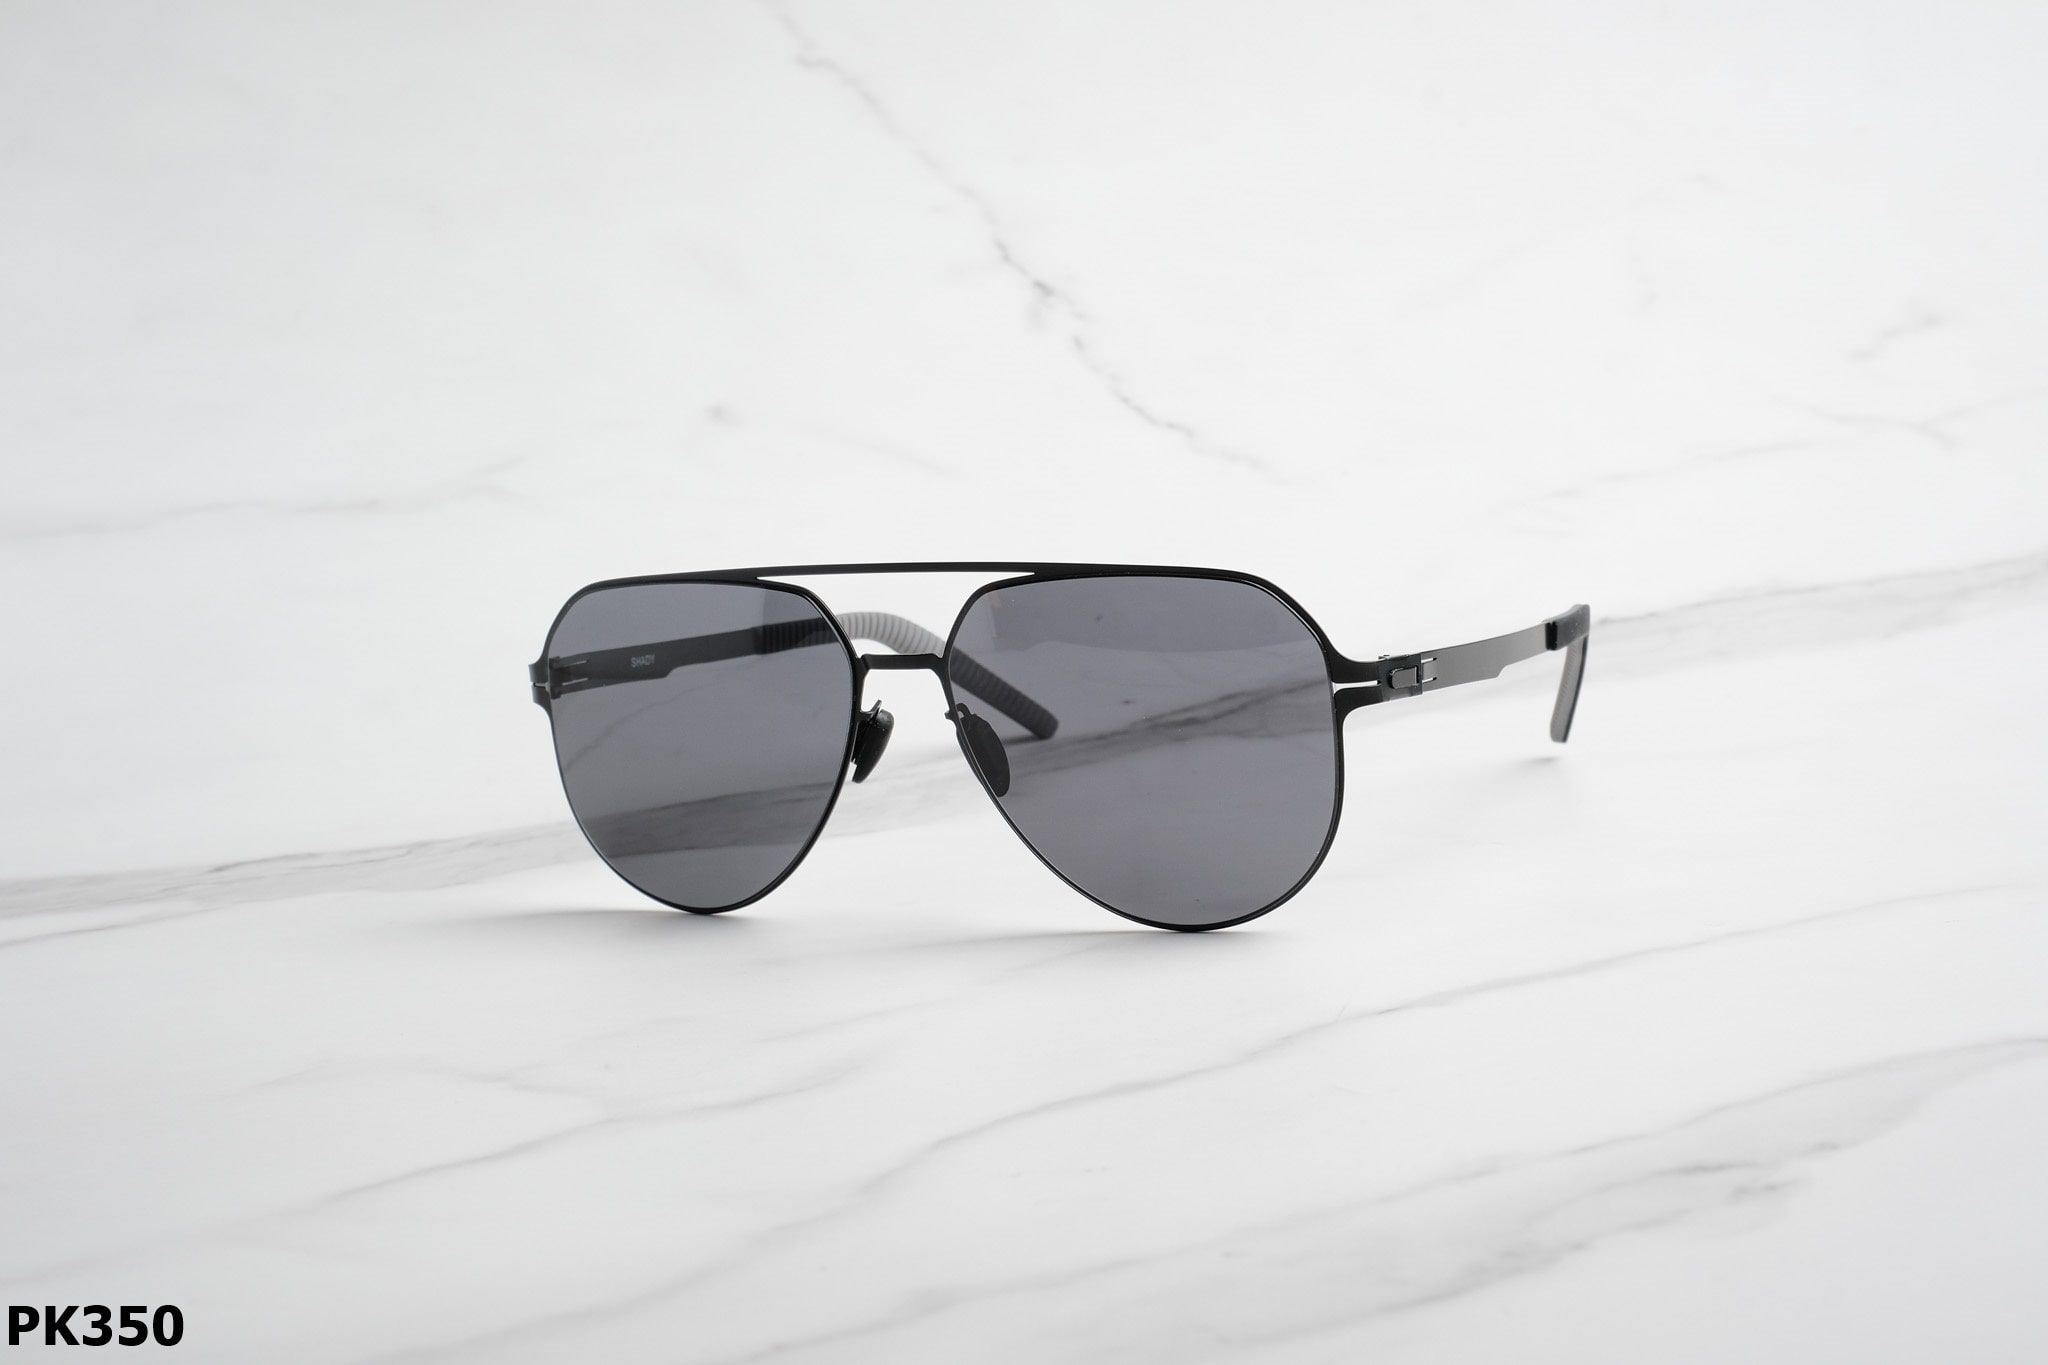  SHADY Eyewear - Sunglasses - PK350 